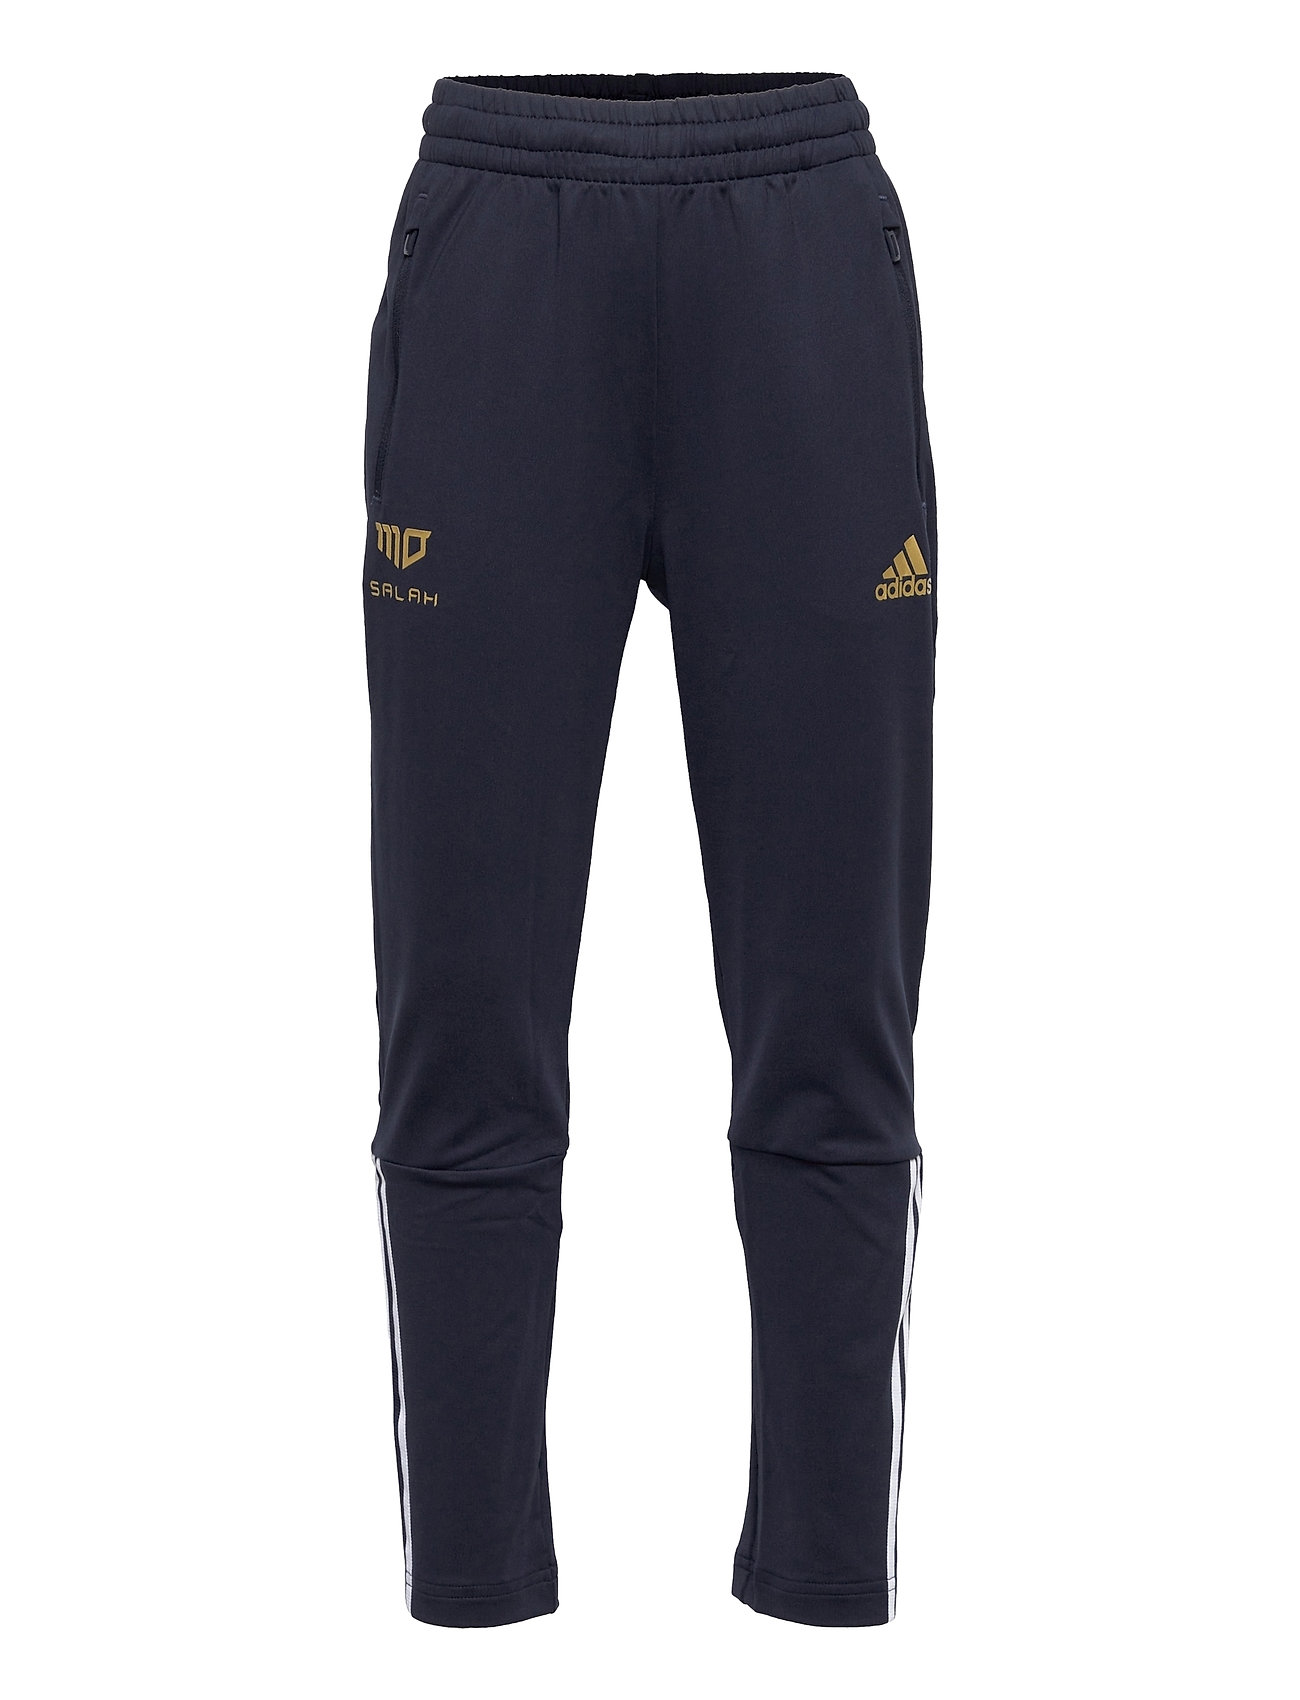 Aeroready Salah Football-Inspired Tapered Pants Collegehousut Olohousut Sininen Adidas Performance, adidas Performance